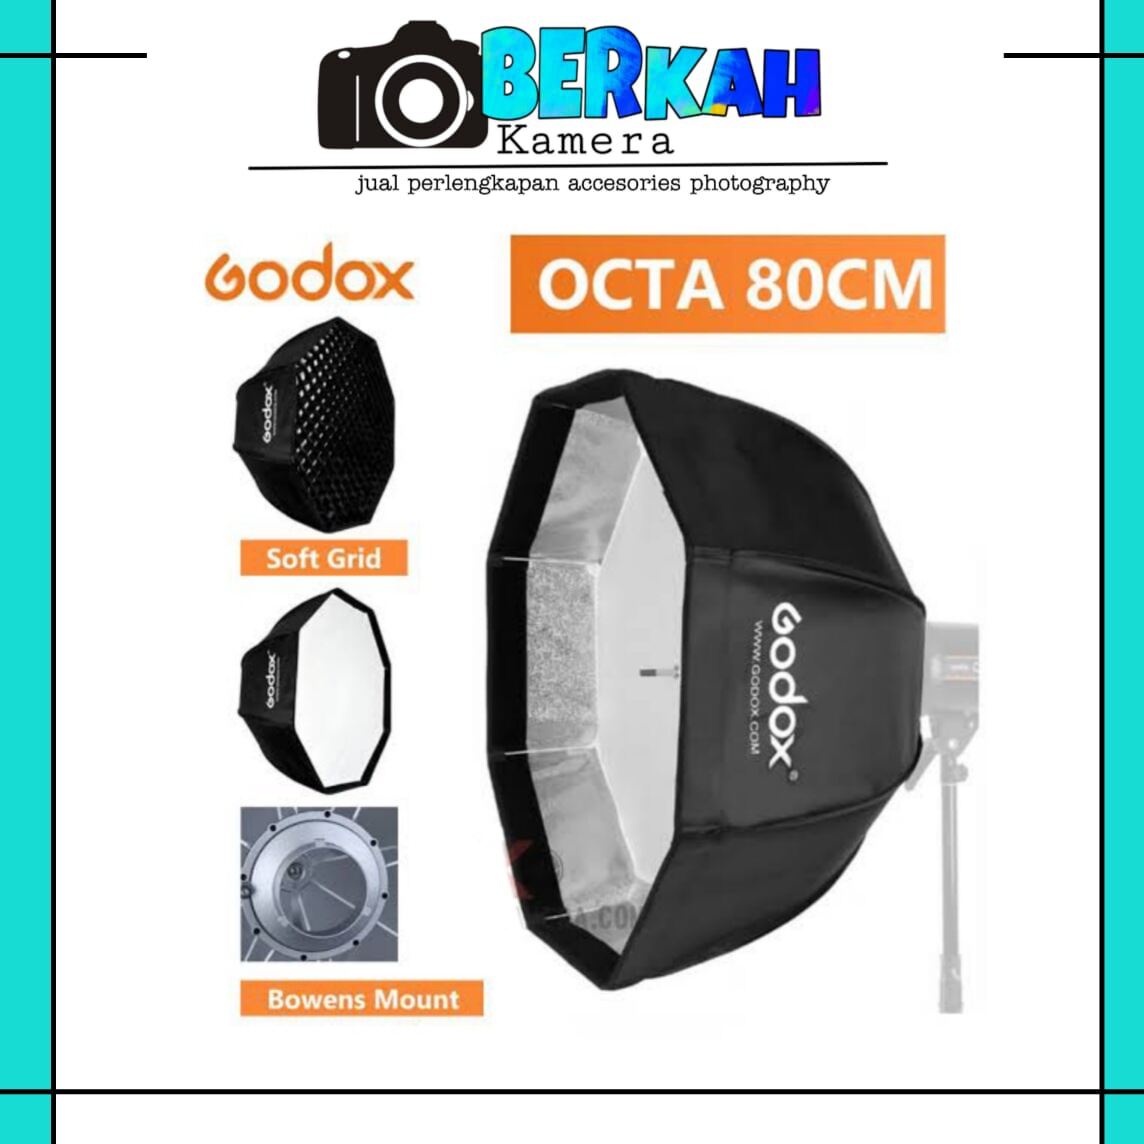 Godox Octa 80cm Softbox